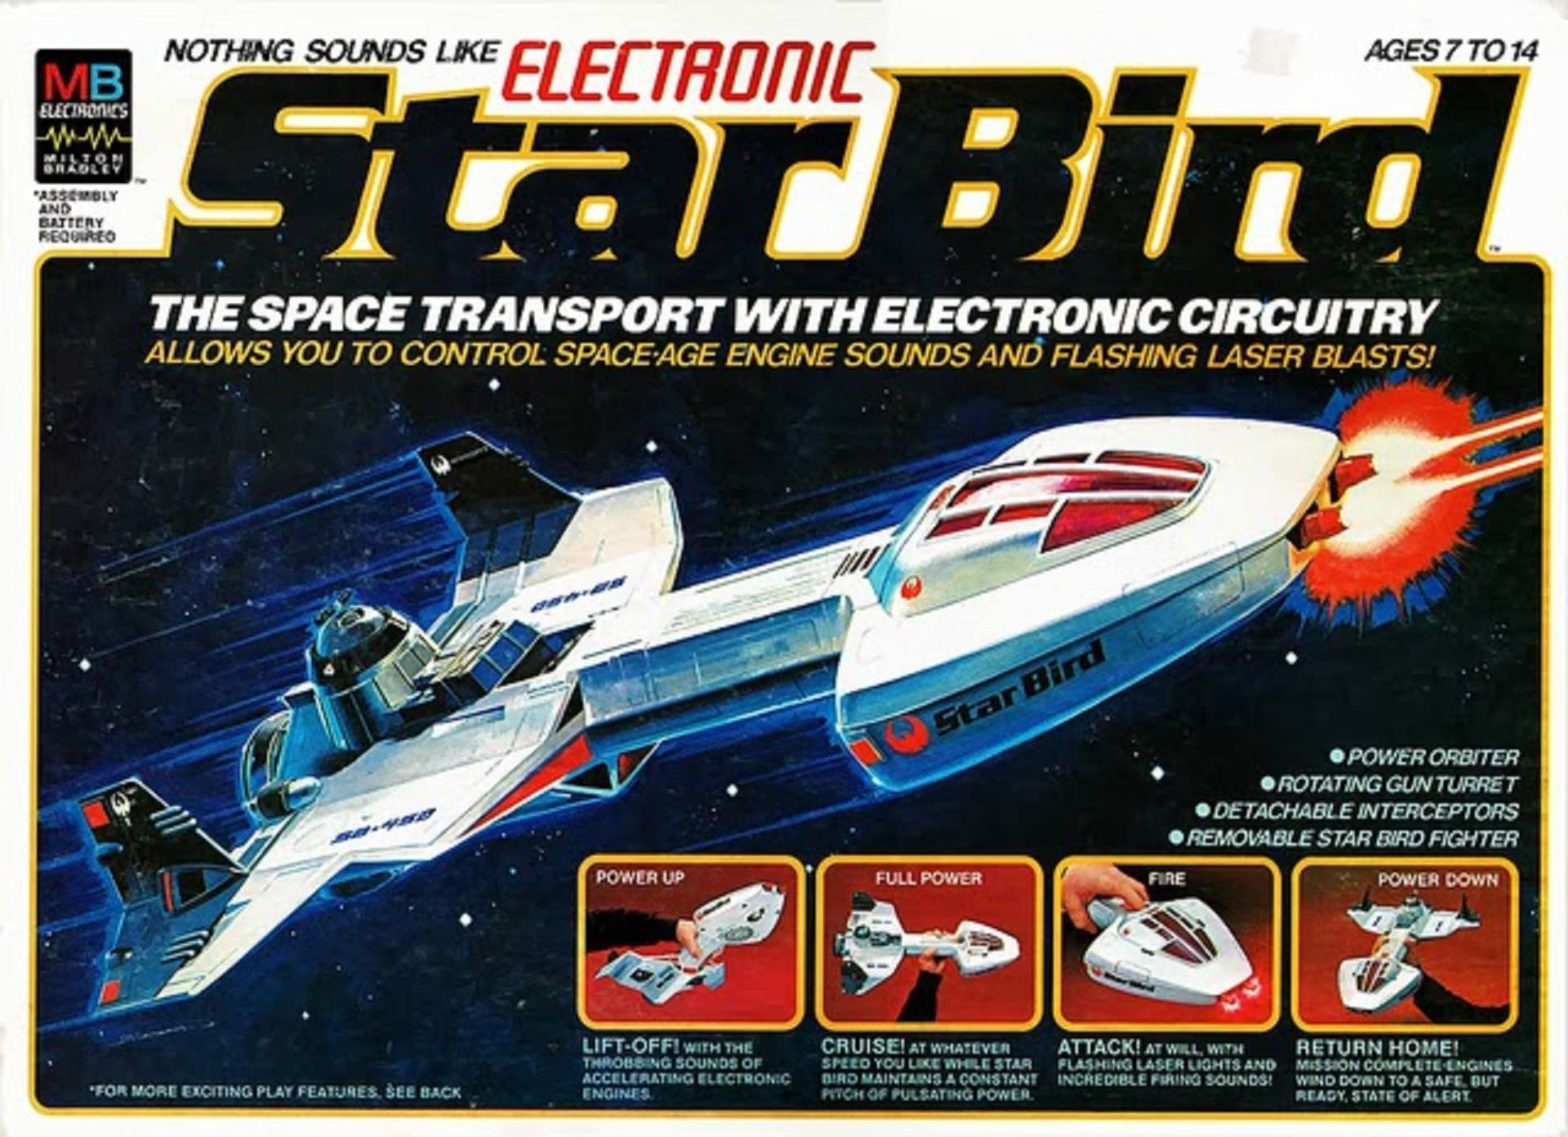 Milton Bradley Starbird box